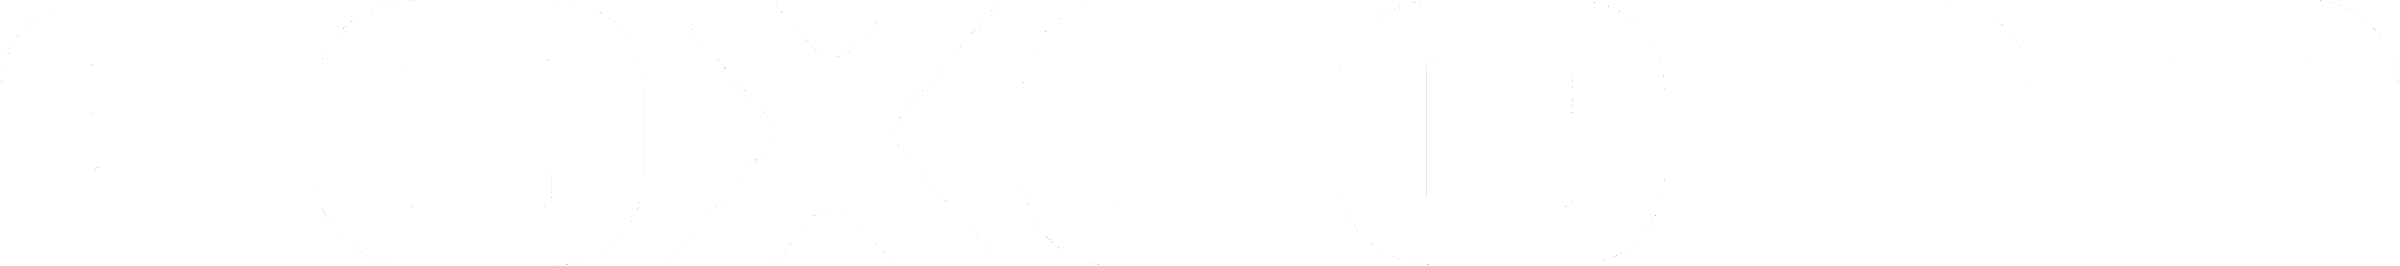 Foxconn Logo - Foxconn Logo PNG Transparent & SVG Vector - Freebie Supply